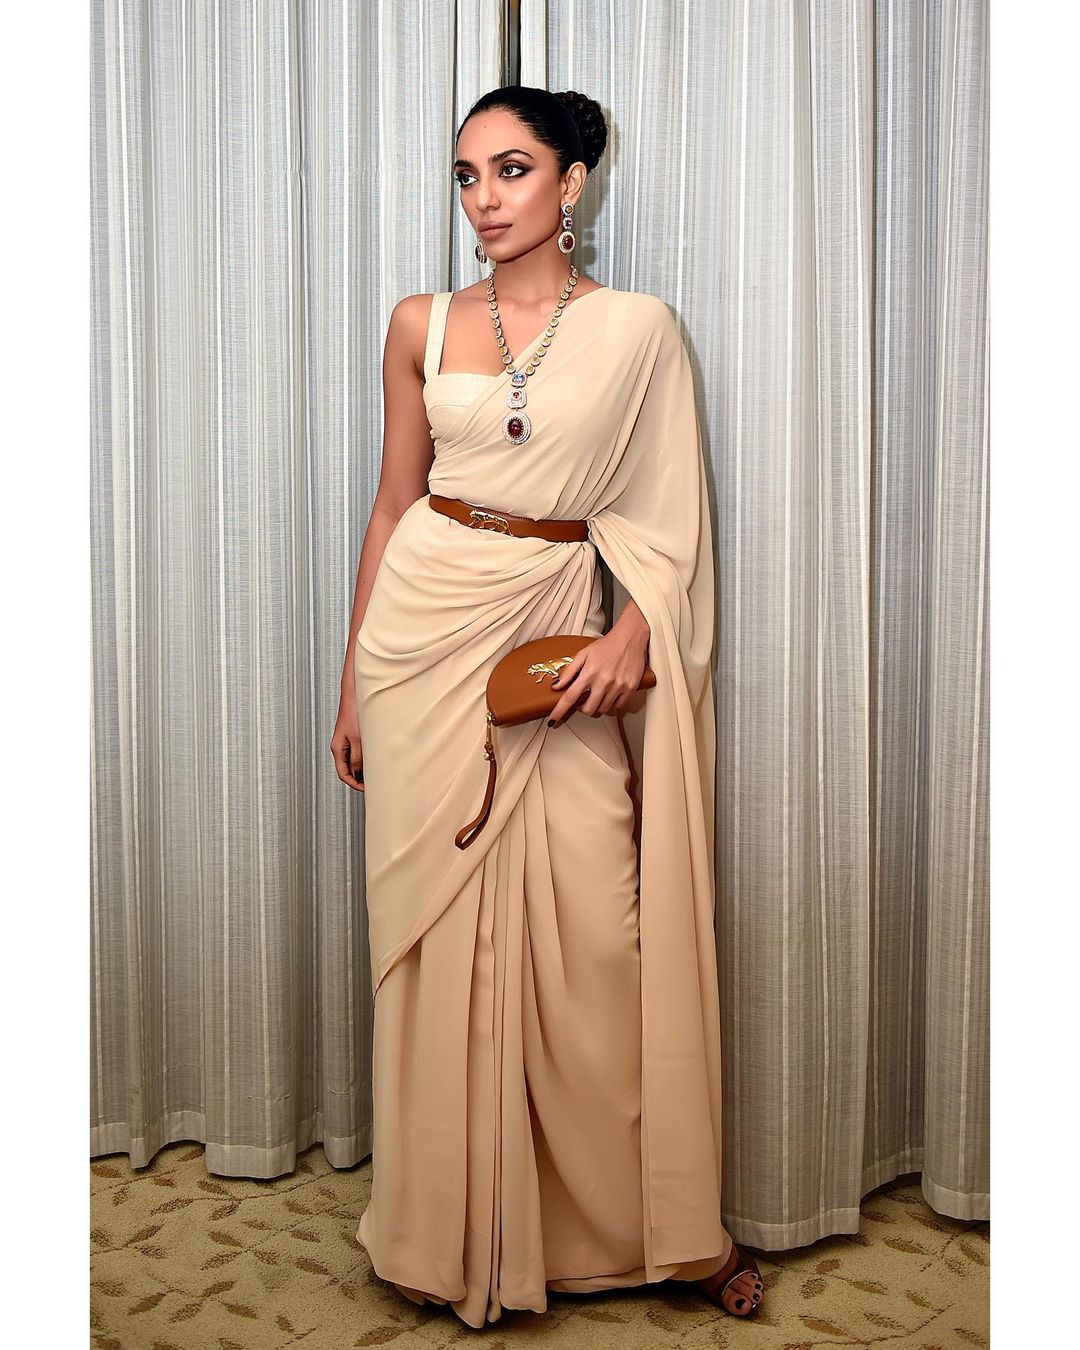 Hit! Sobhita Dhulipala looks super sexy in a plain saree